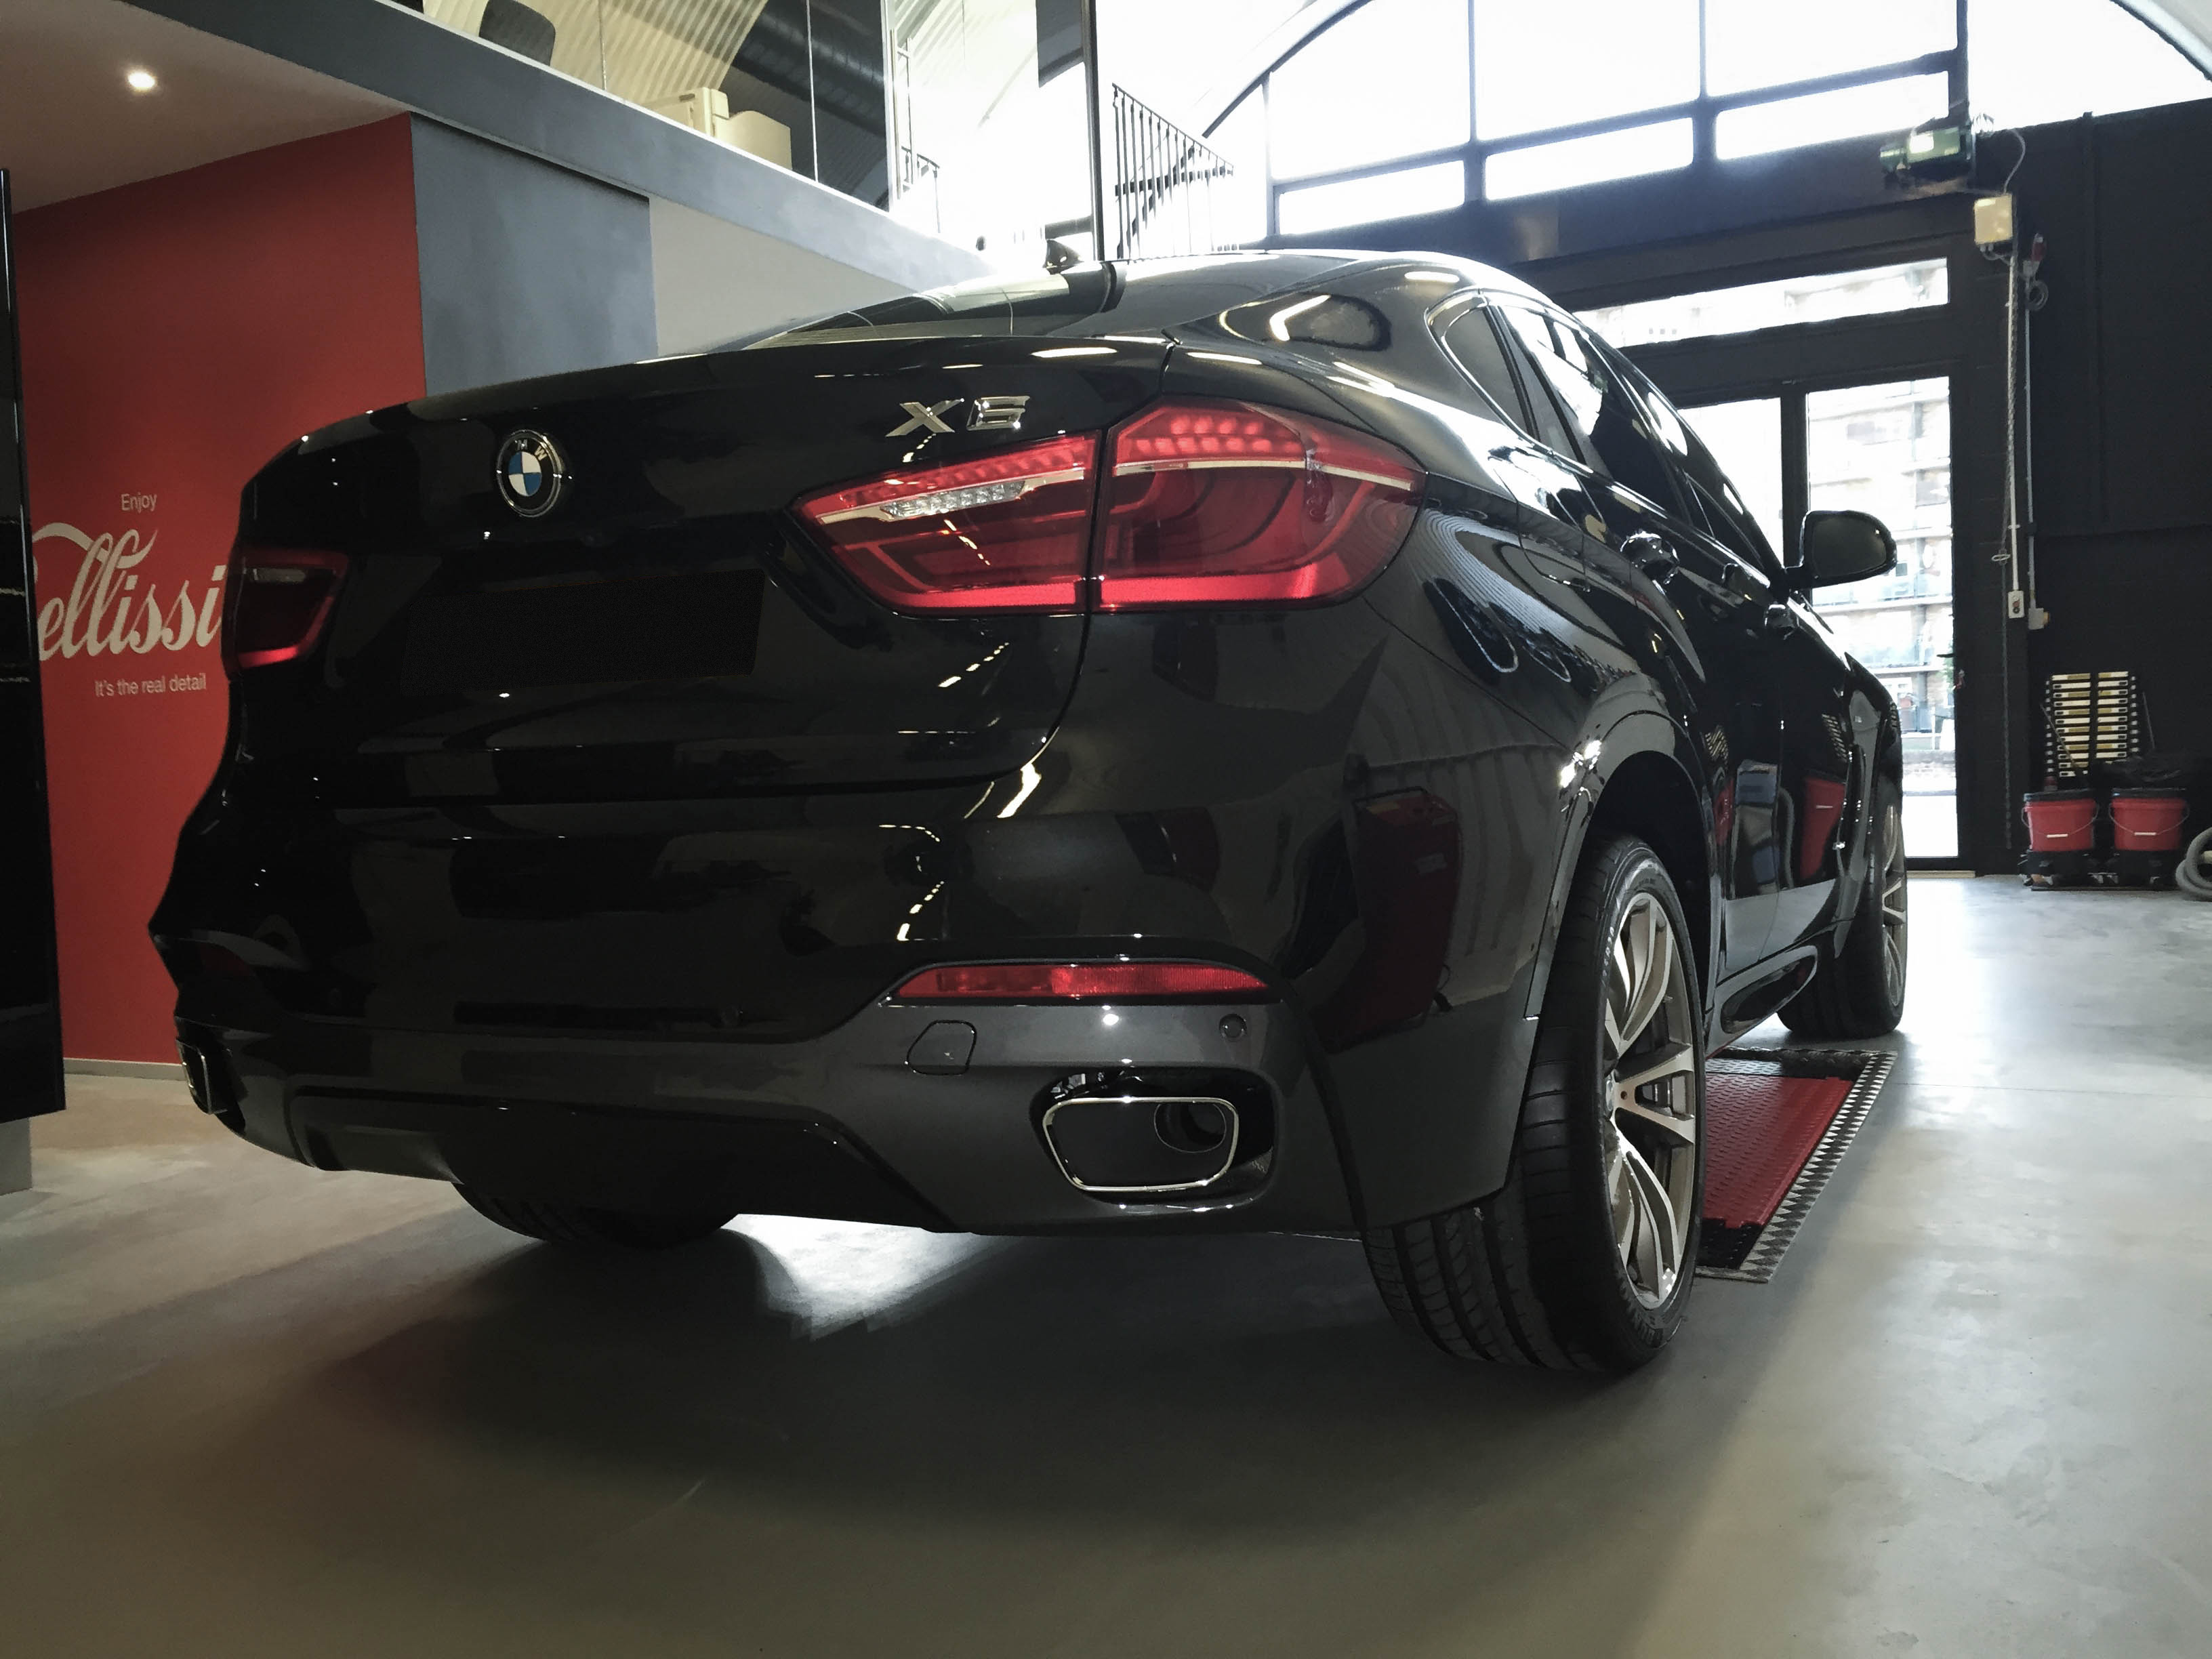 BMW X6 – Rear